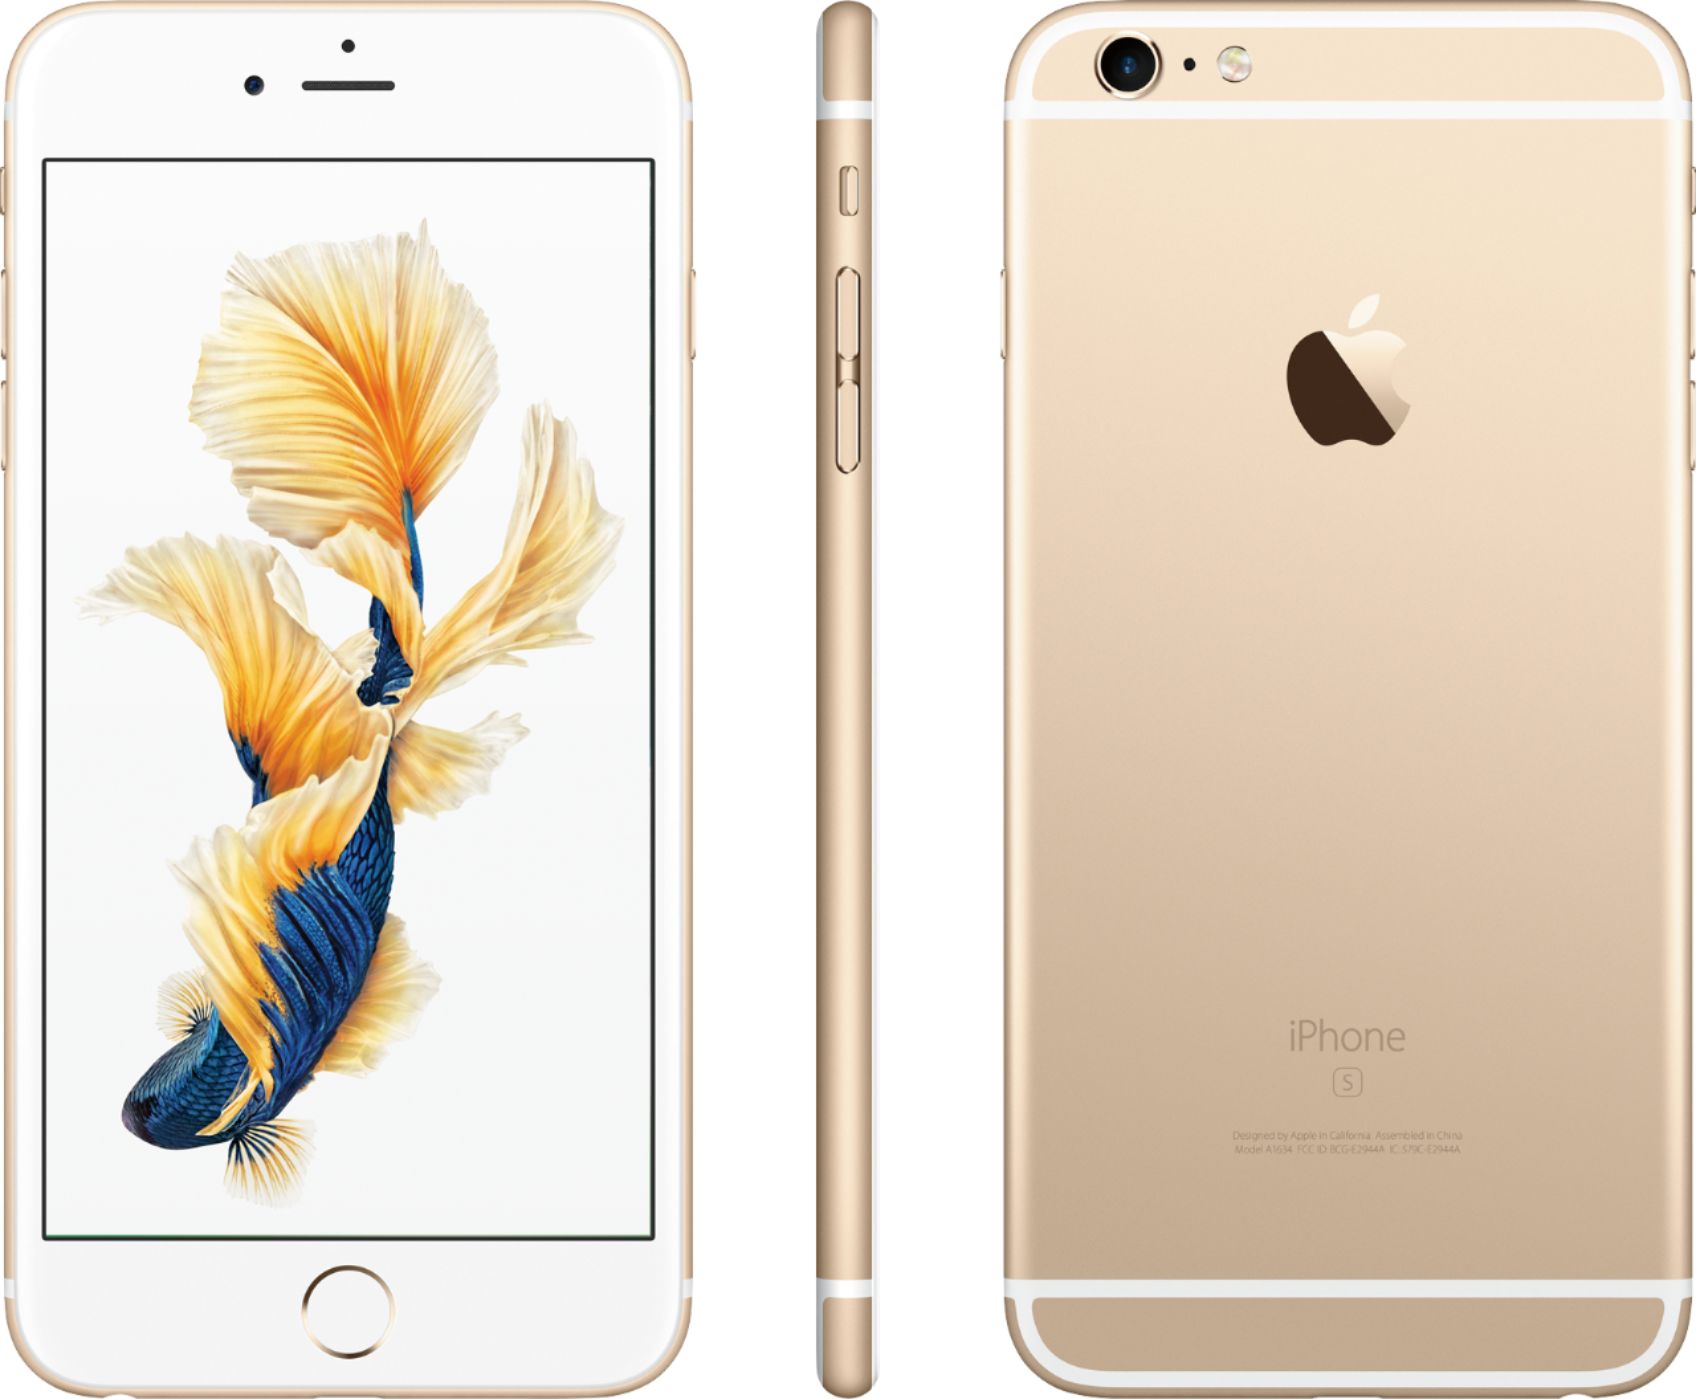 Apple iPhone 6s Plus 32GB Gold (Verizon) MN362LL/A - Best Buy